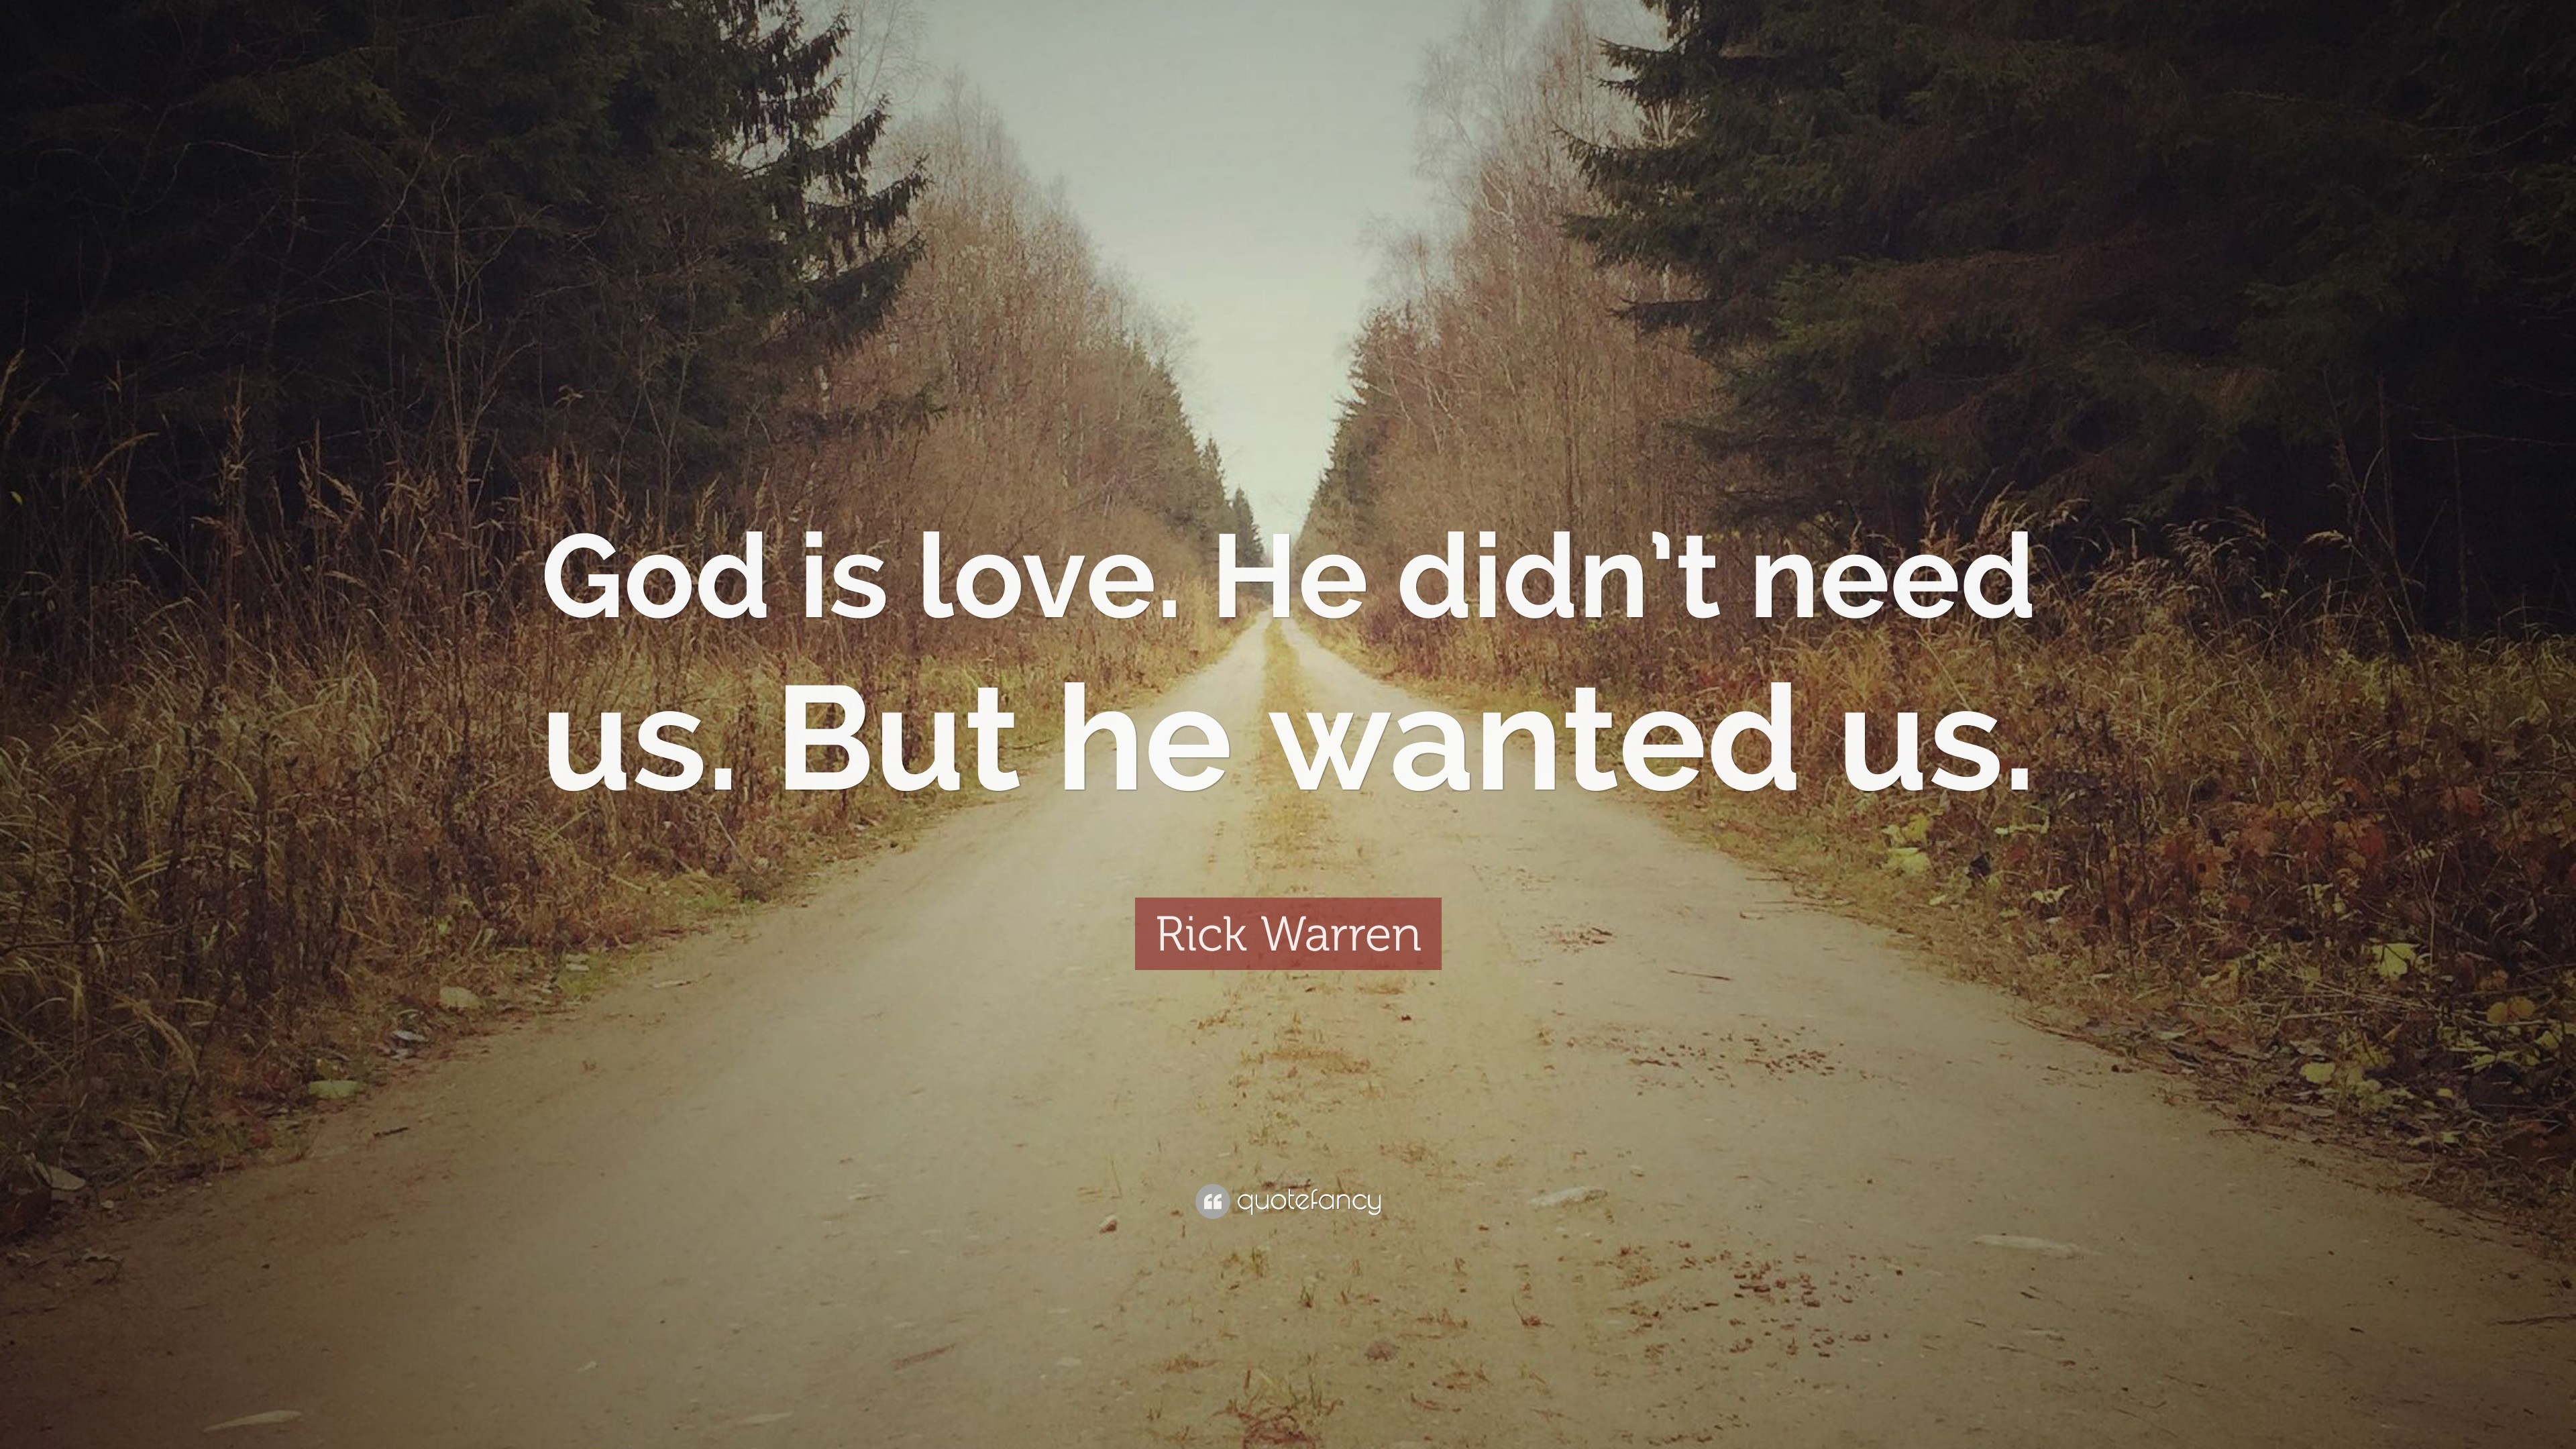 3840x2160 Rick Warren Quote: “God is love. He didn't need us.